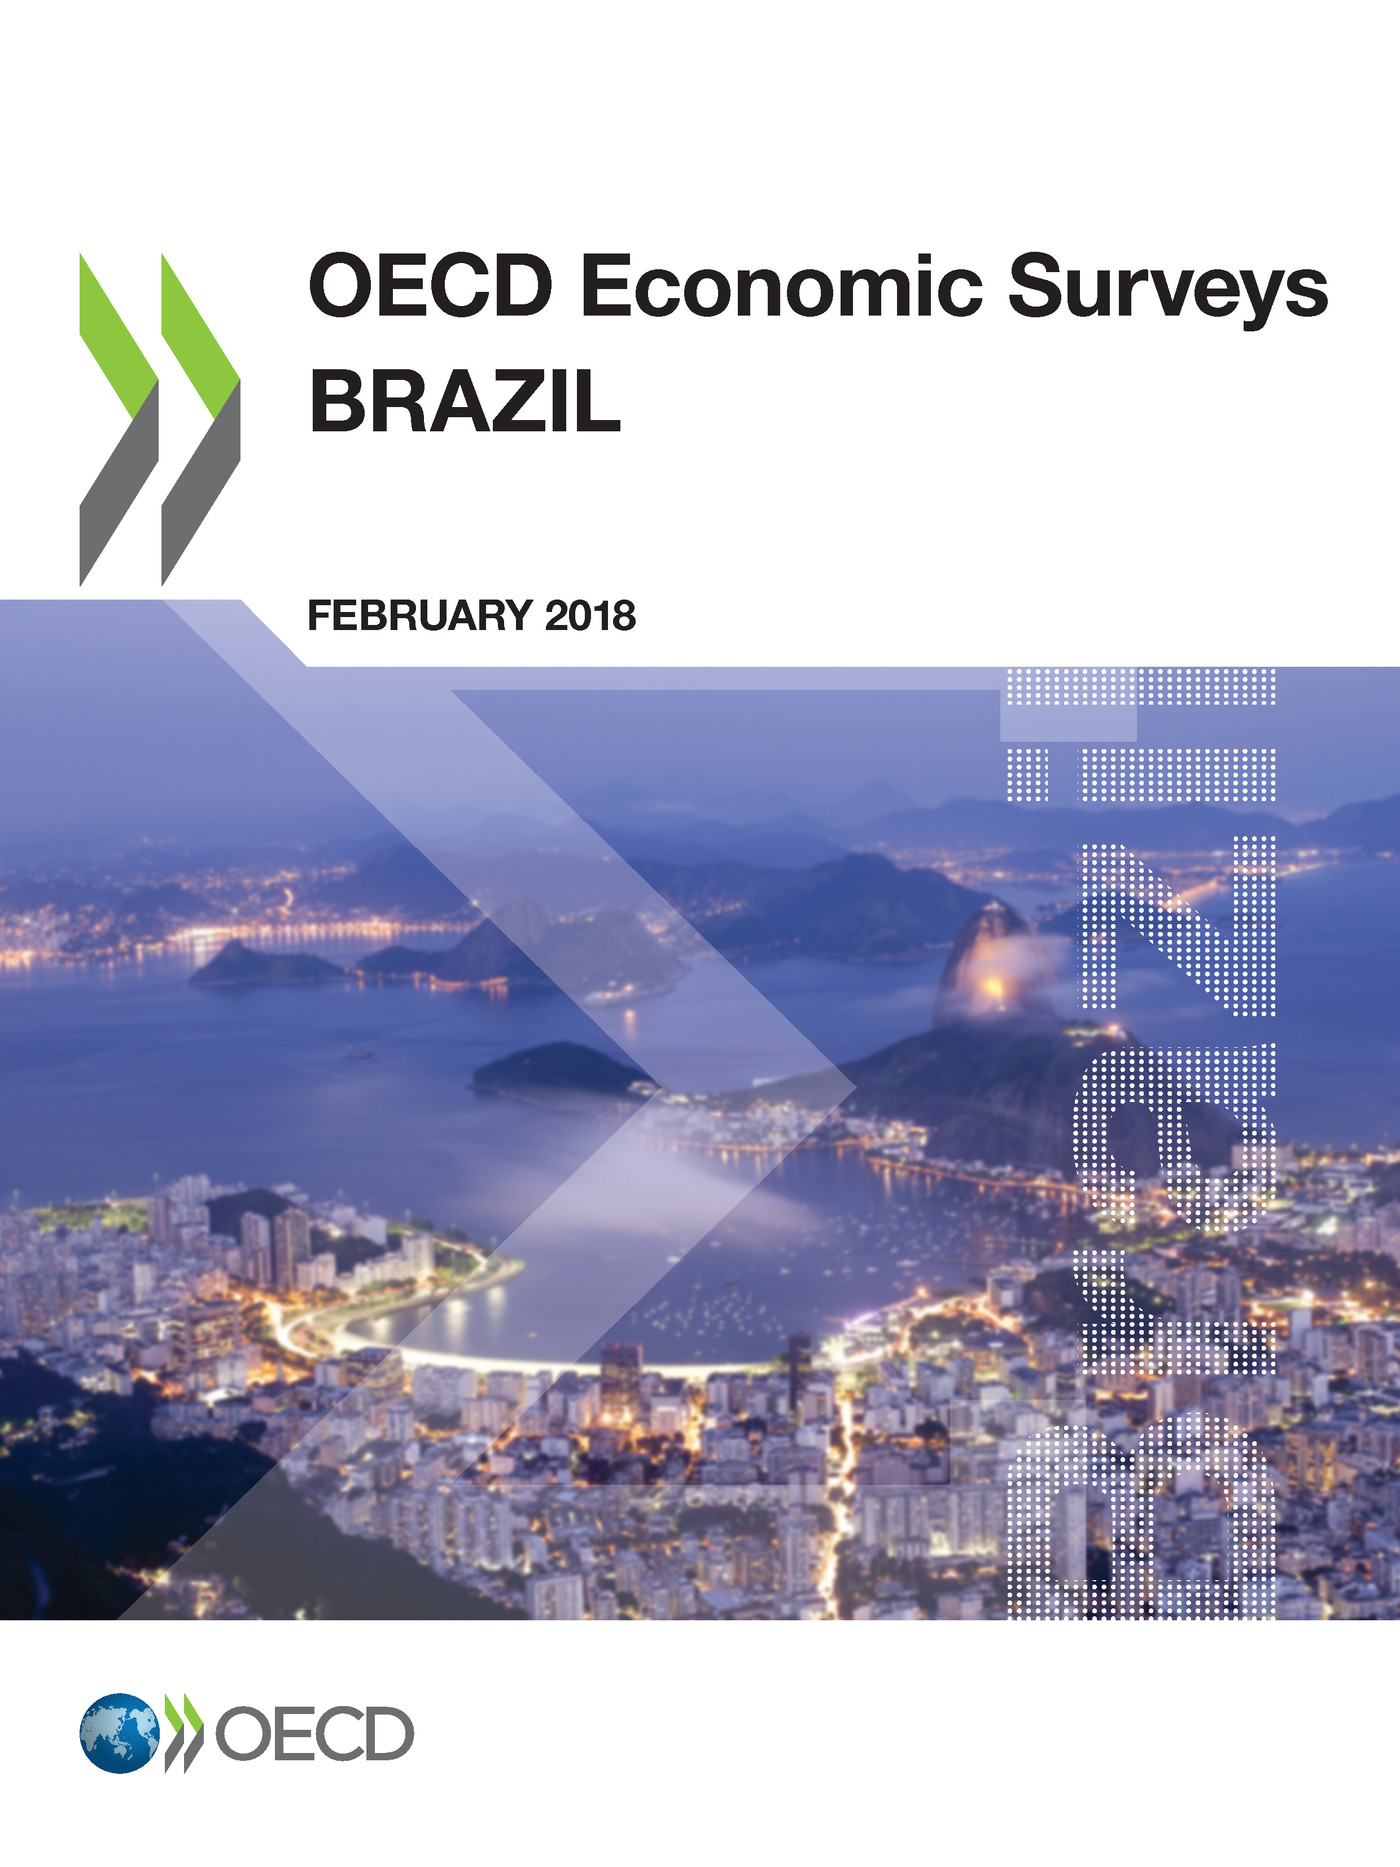 OECD Economic Surveys: Brazil 2018 -  Collectif - OCDE / OECD